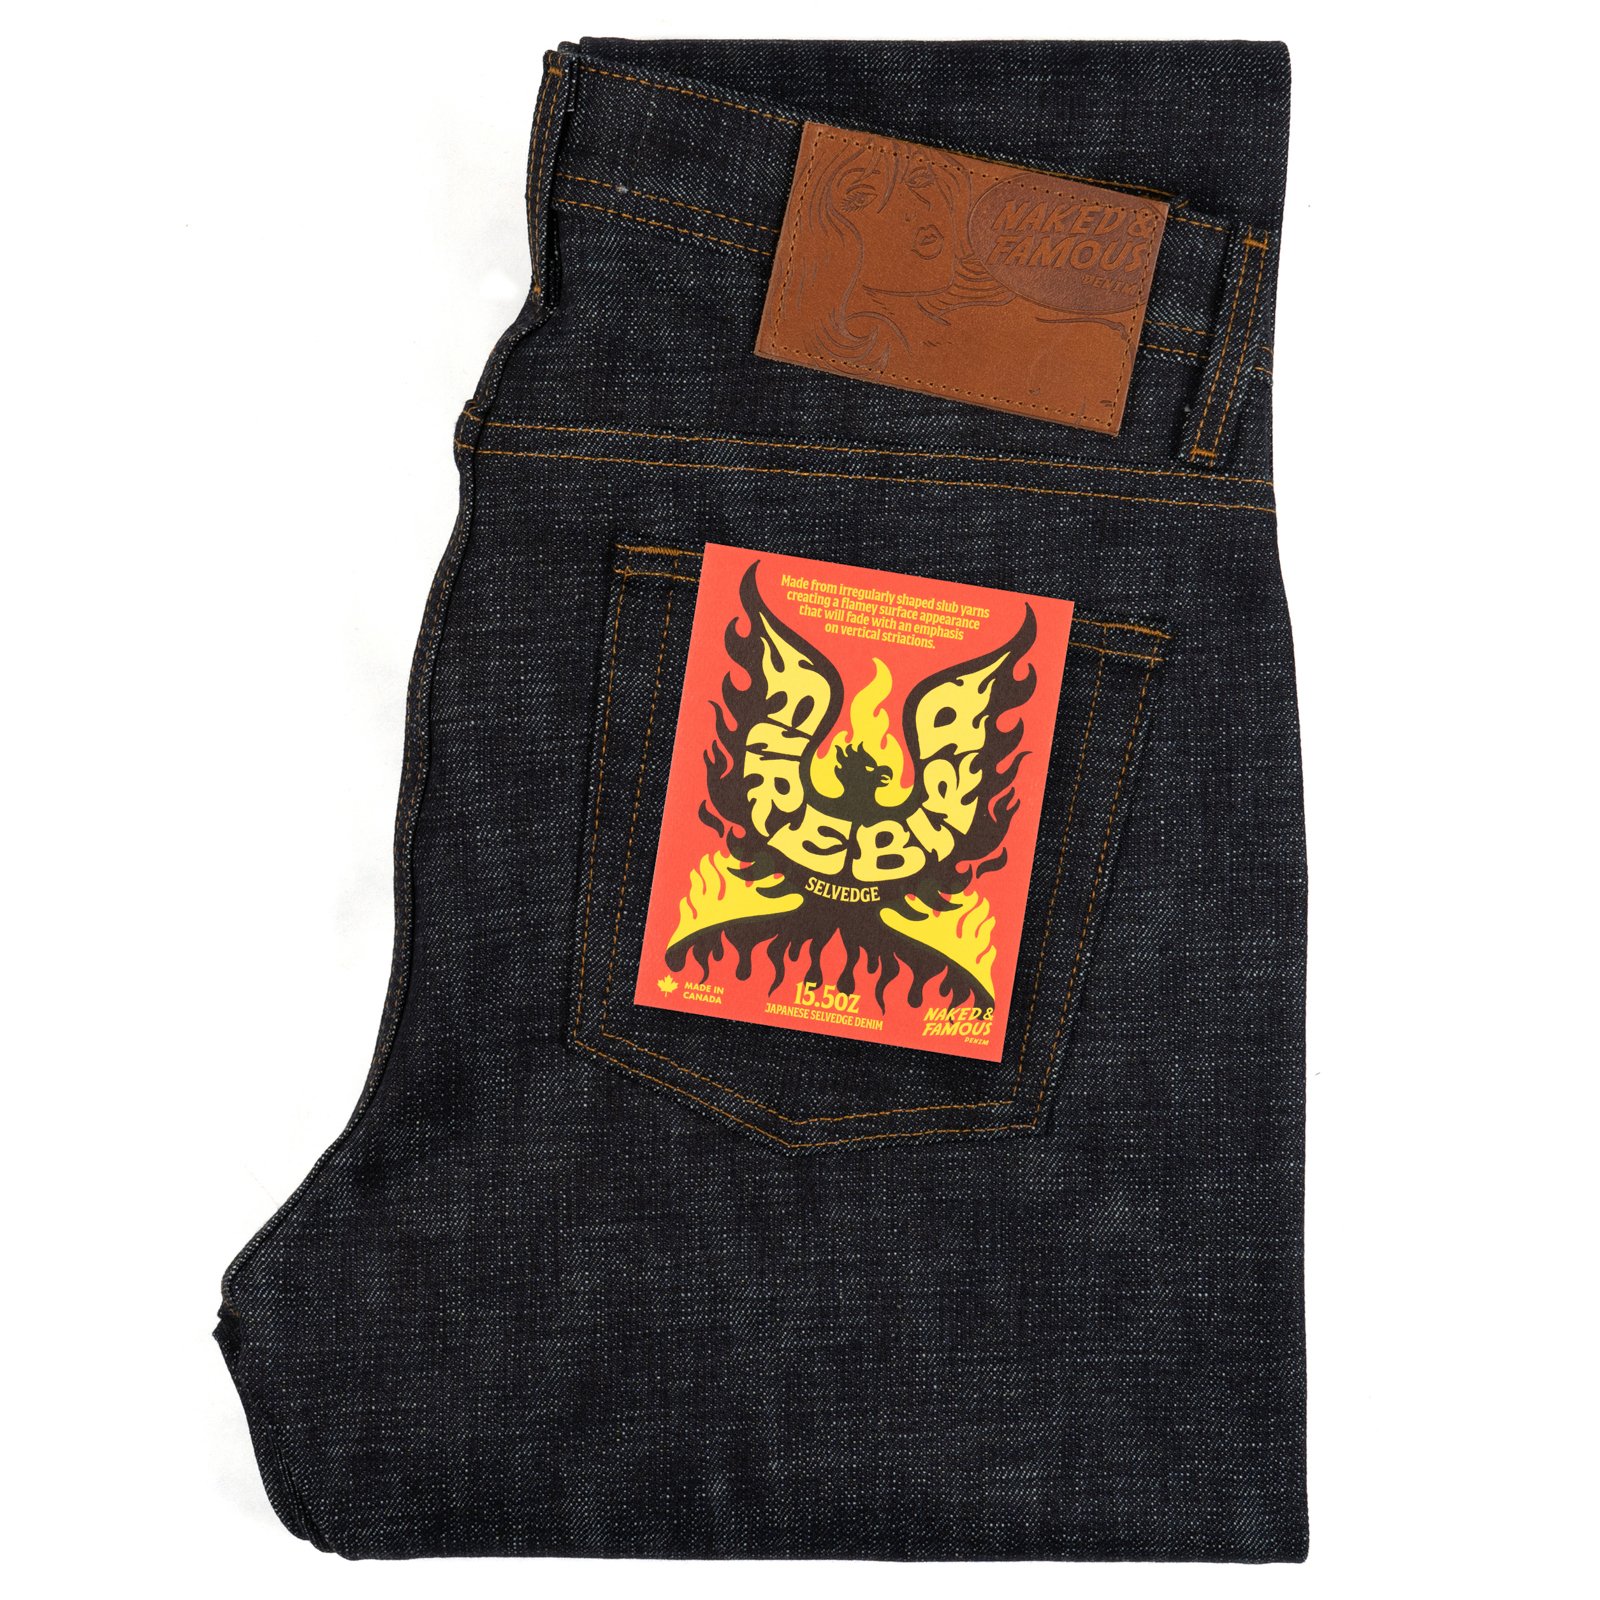  Firebird Selvedge jeans - folded 